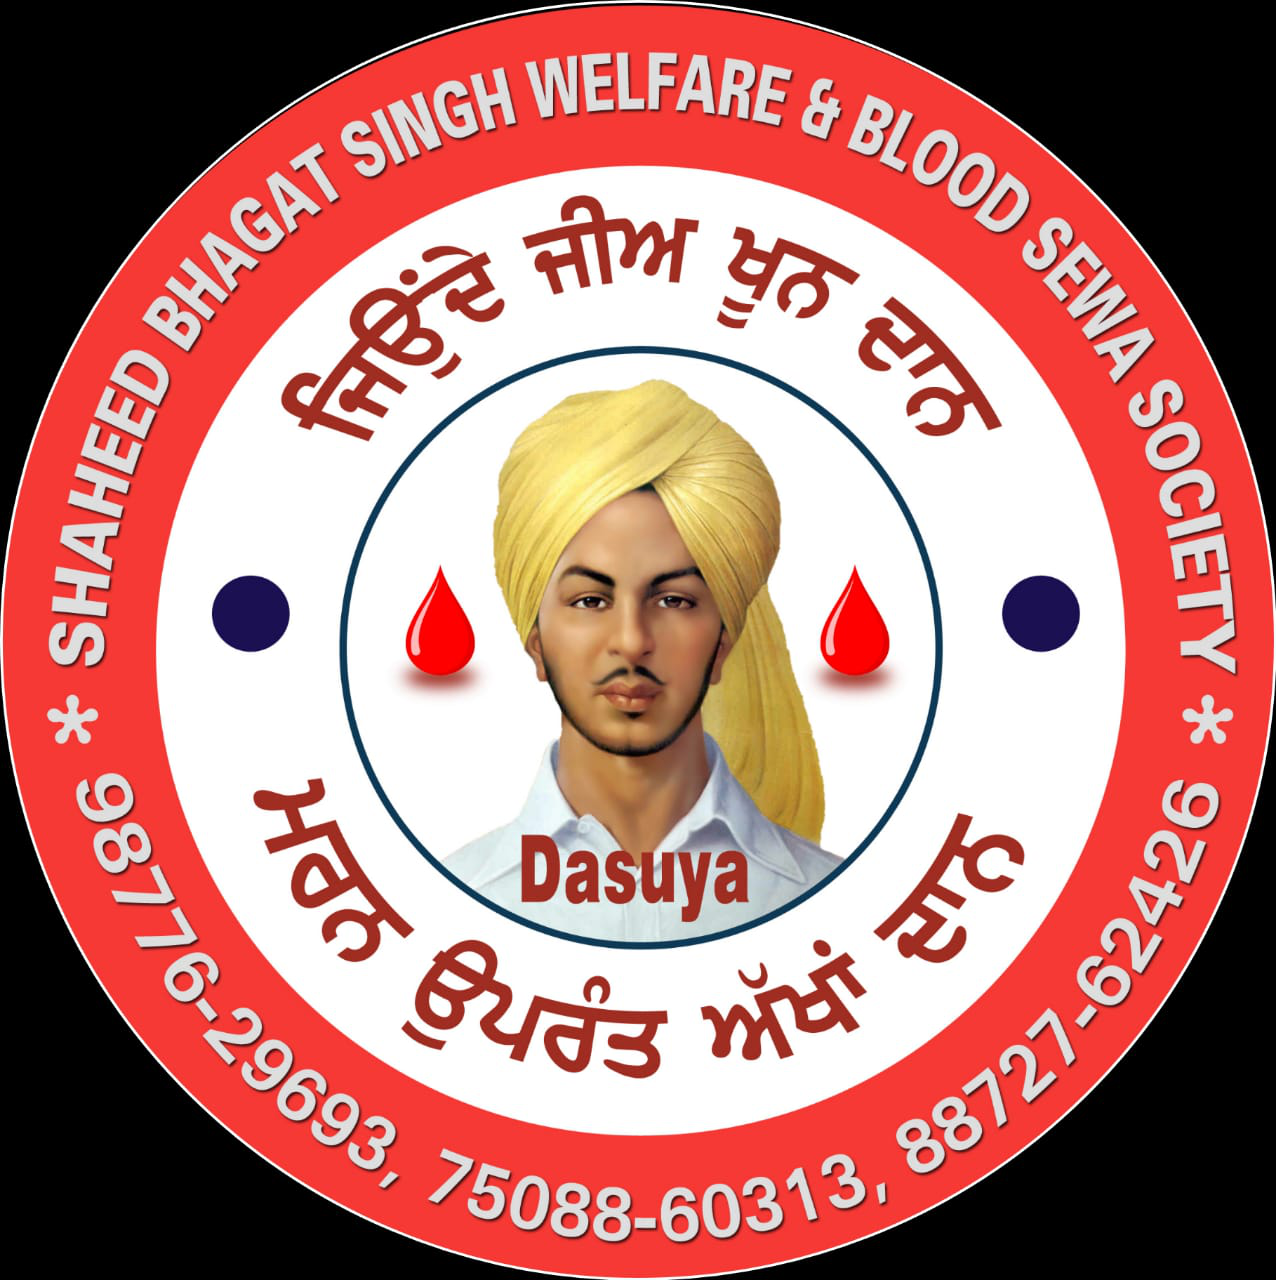 Shaheed Bhagat Singh Welfare LOGO